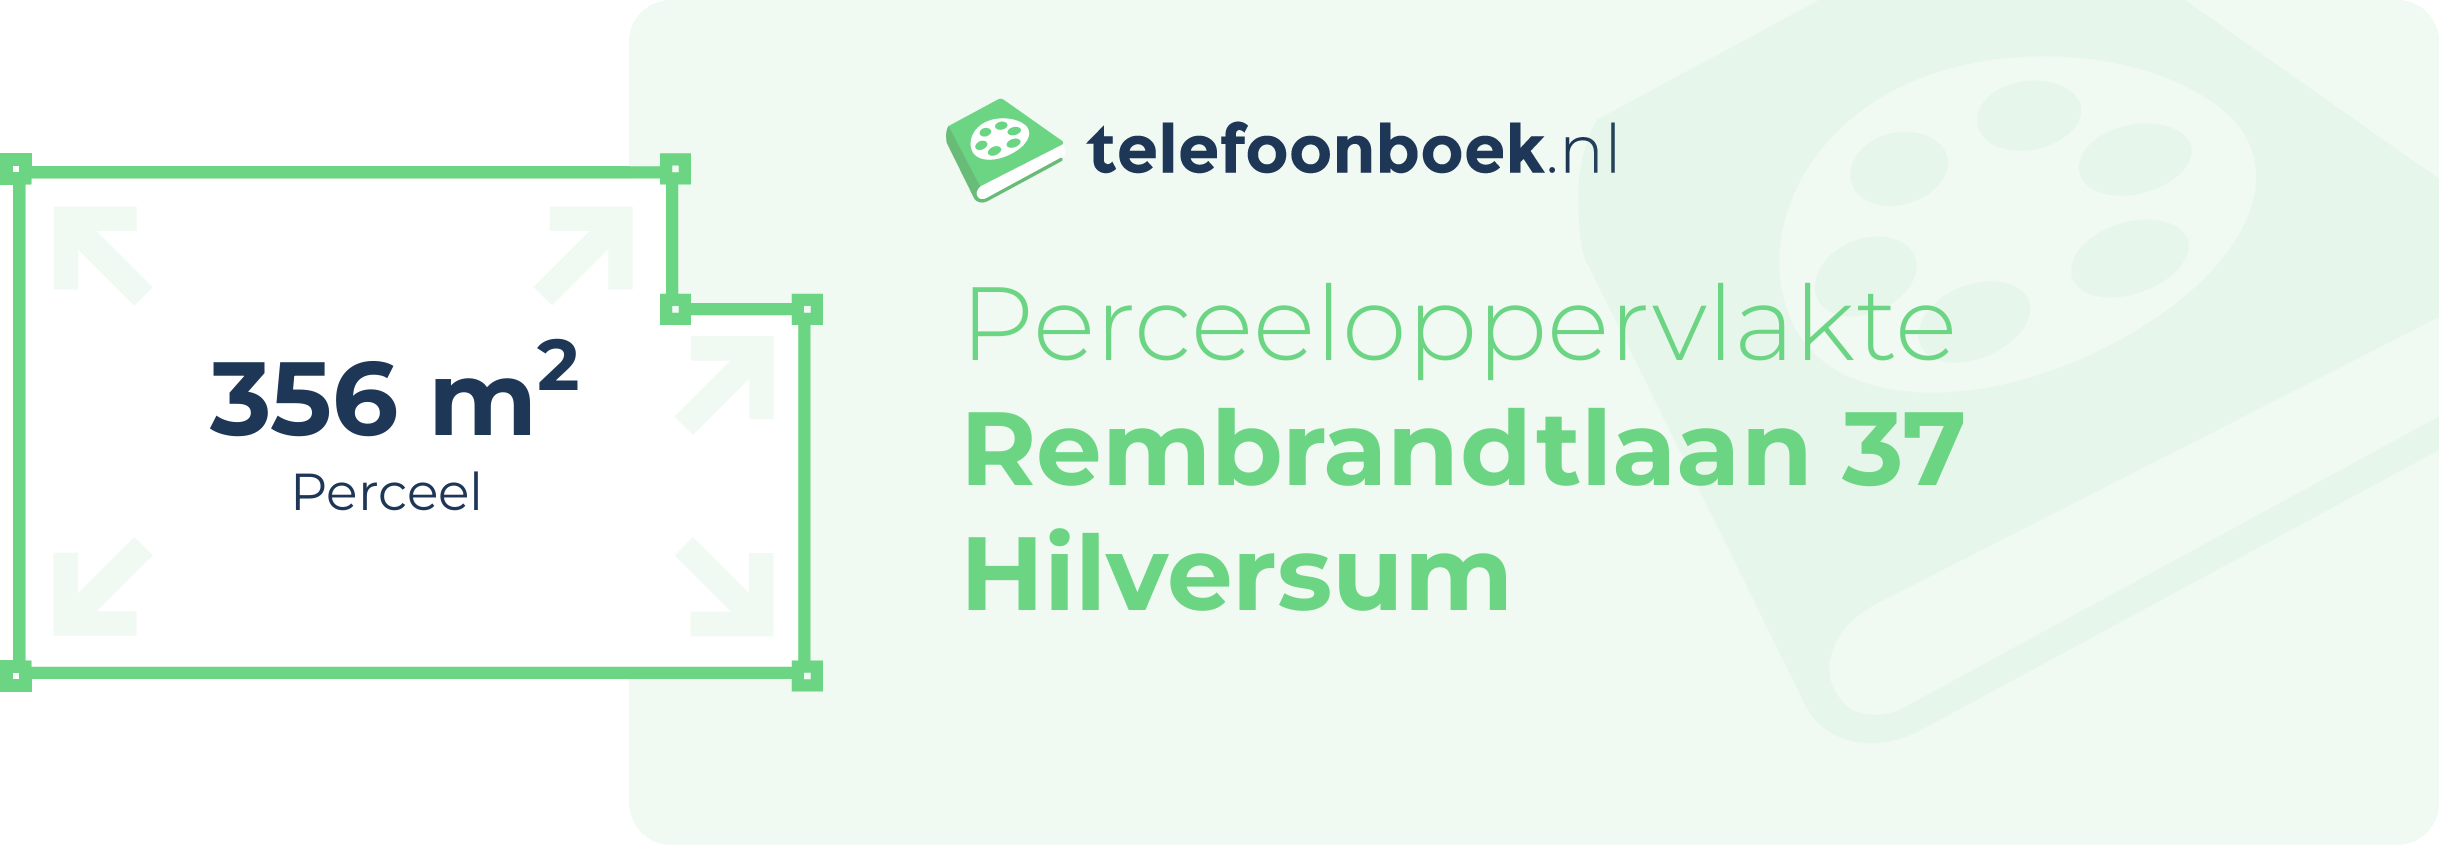 Perceeloppervlakte Rembrandtlaan 37 Hilversum